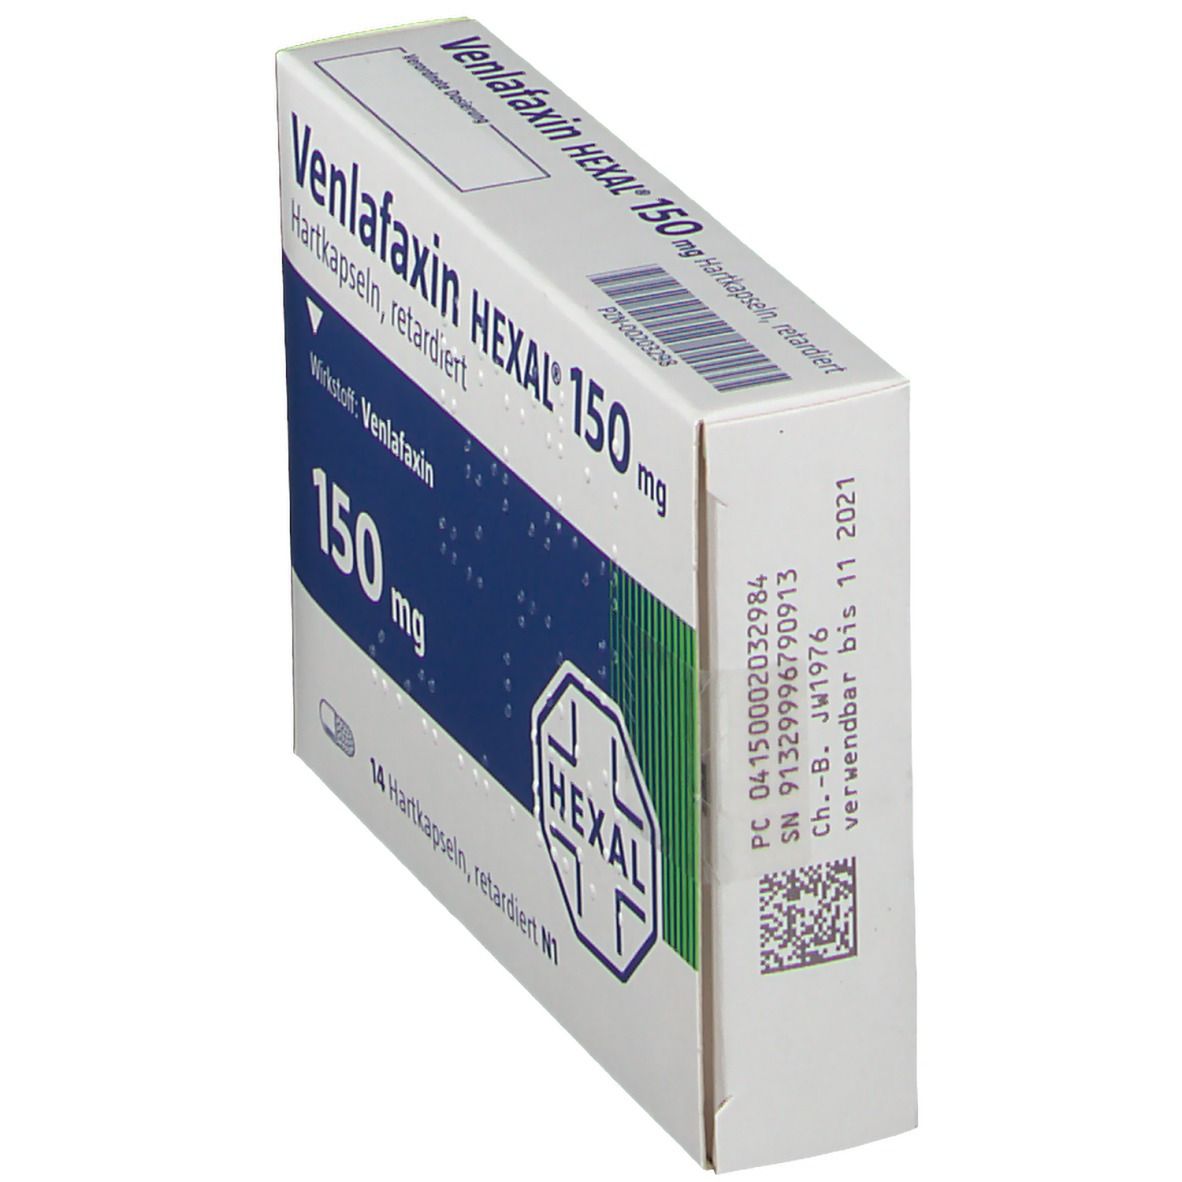 Venlafaxin HEXAL® 150 mg